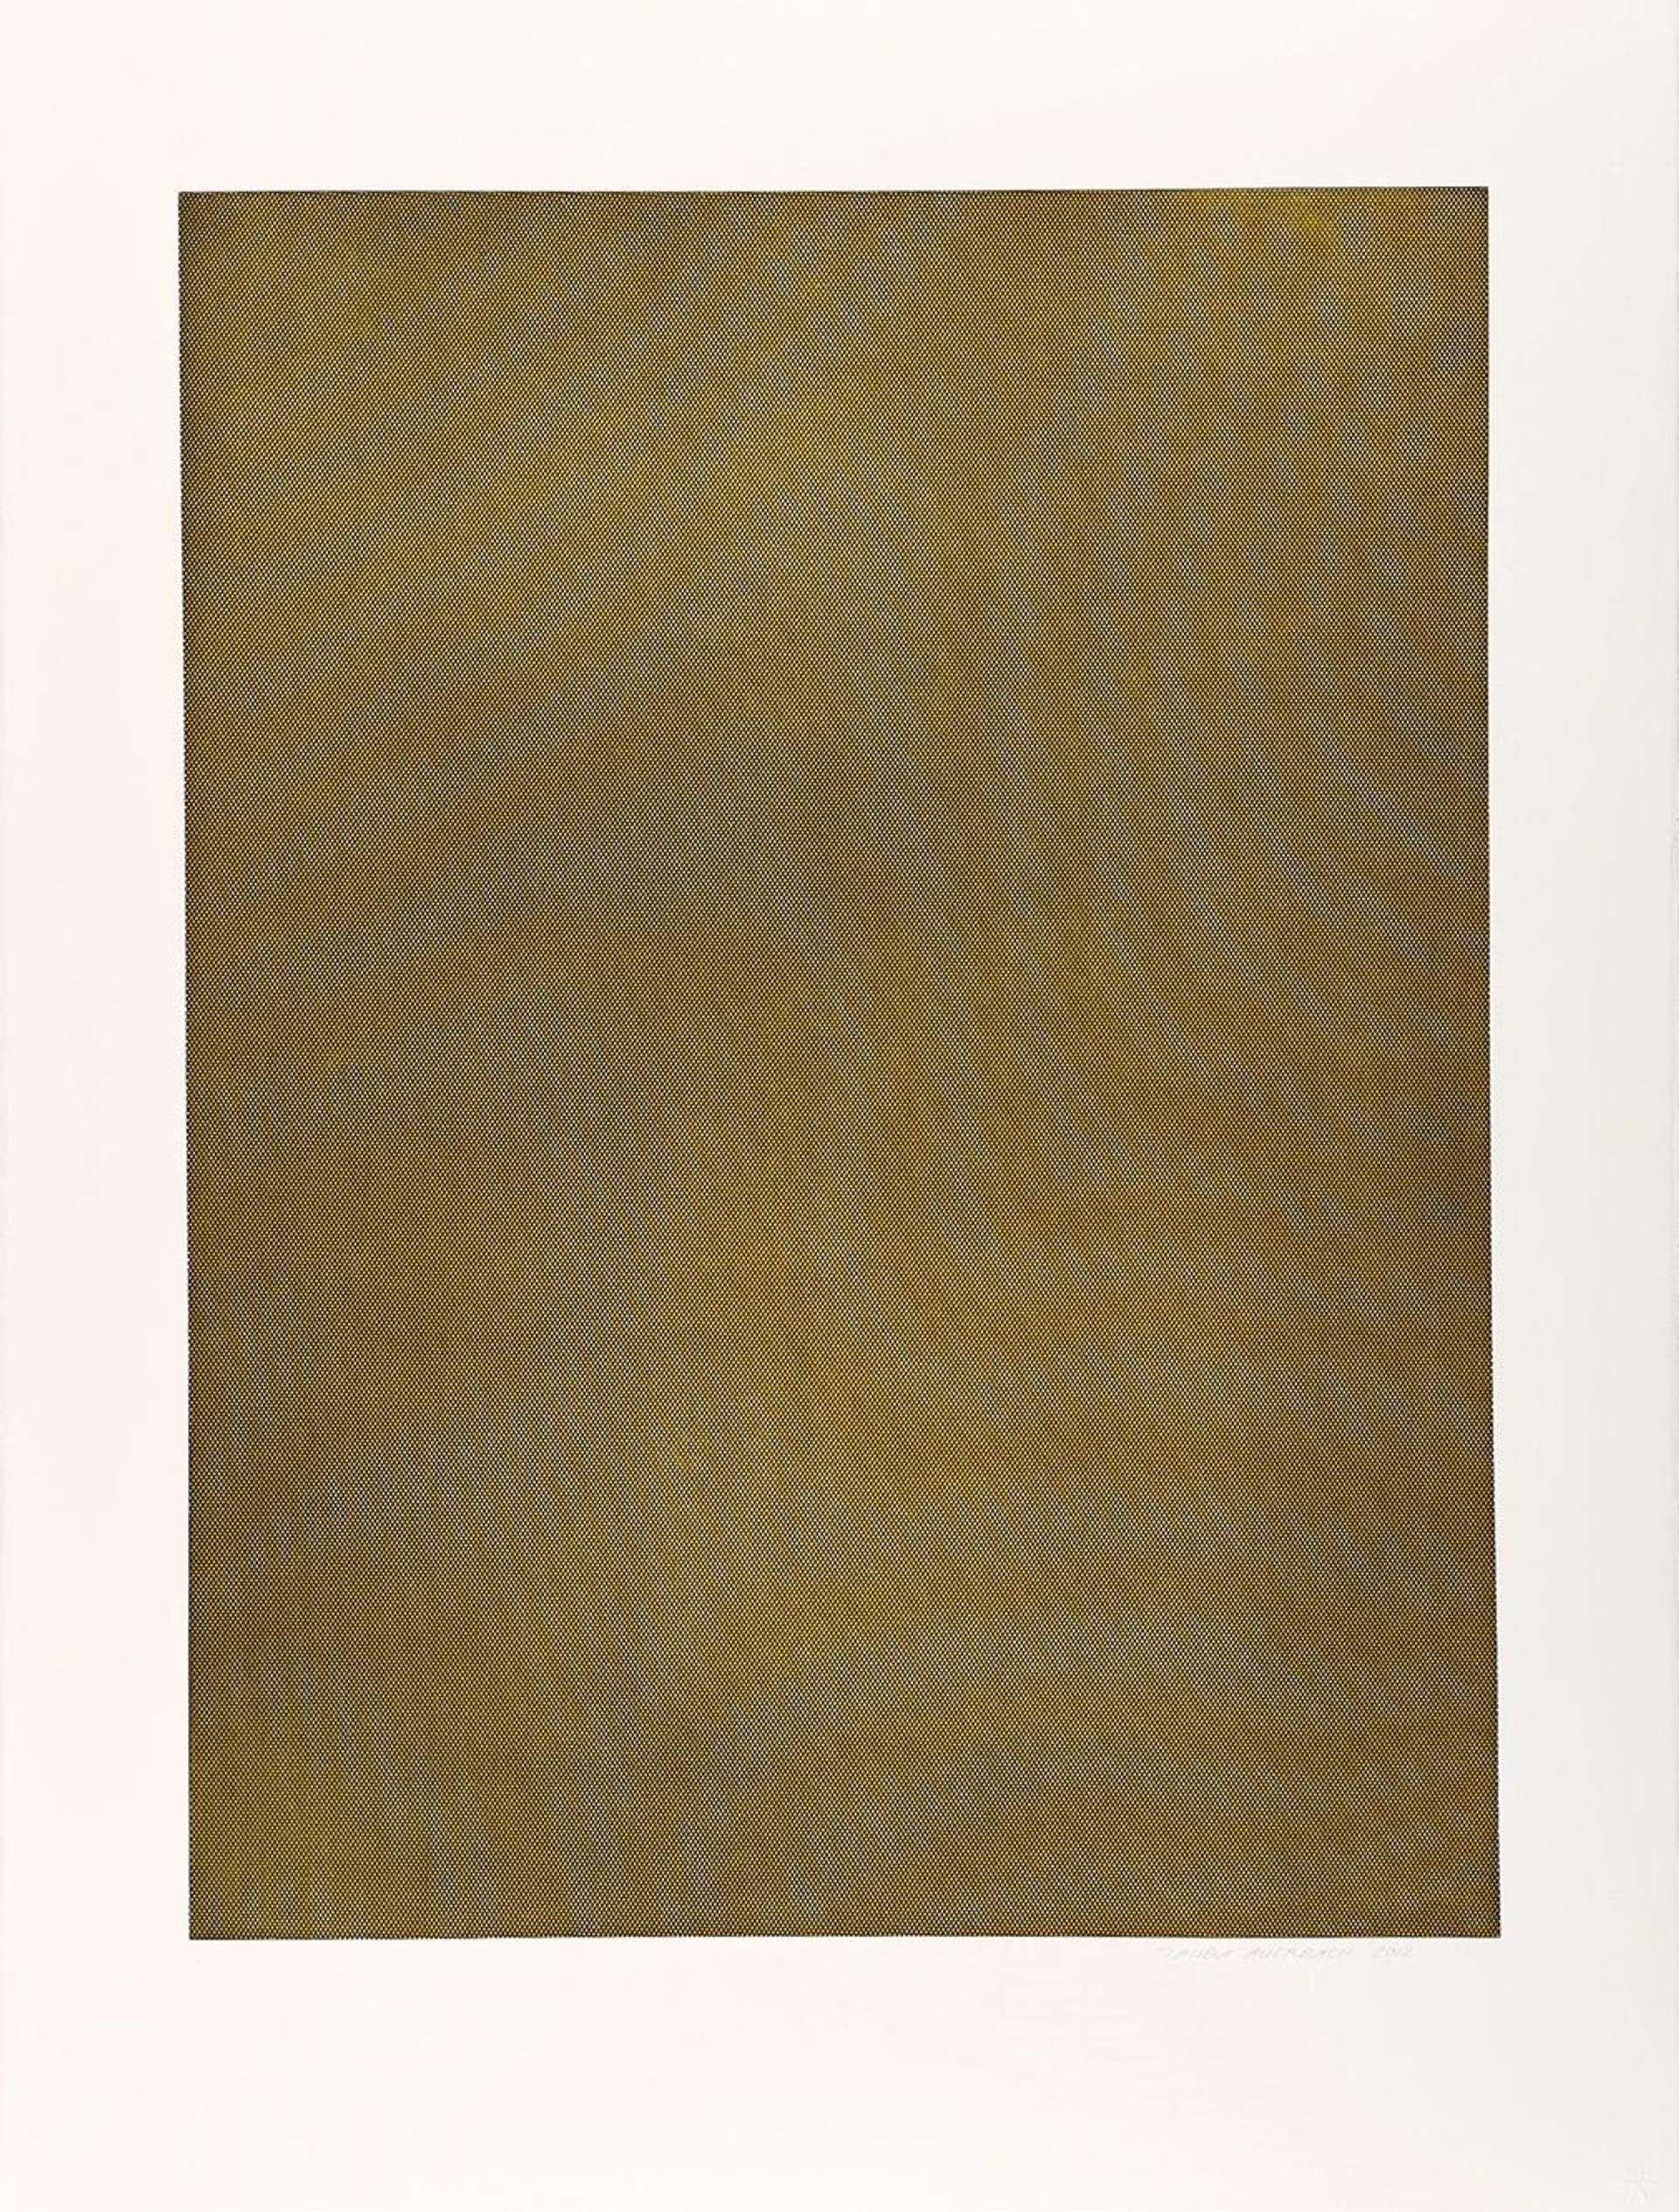 Mesh Moire III - Signed Print by Tauba Auerbach 2012 - MyArtBroker